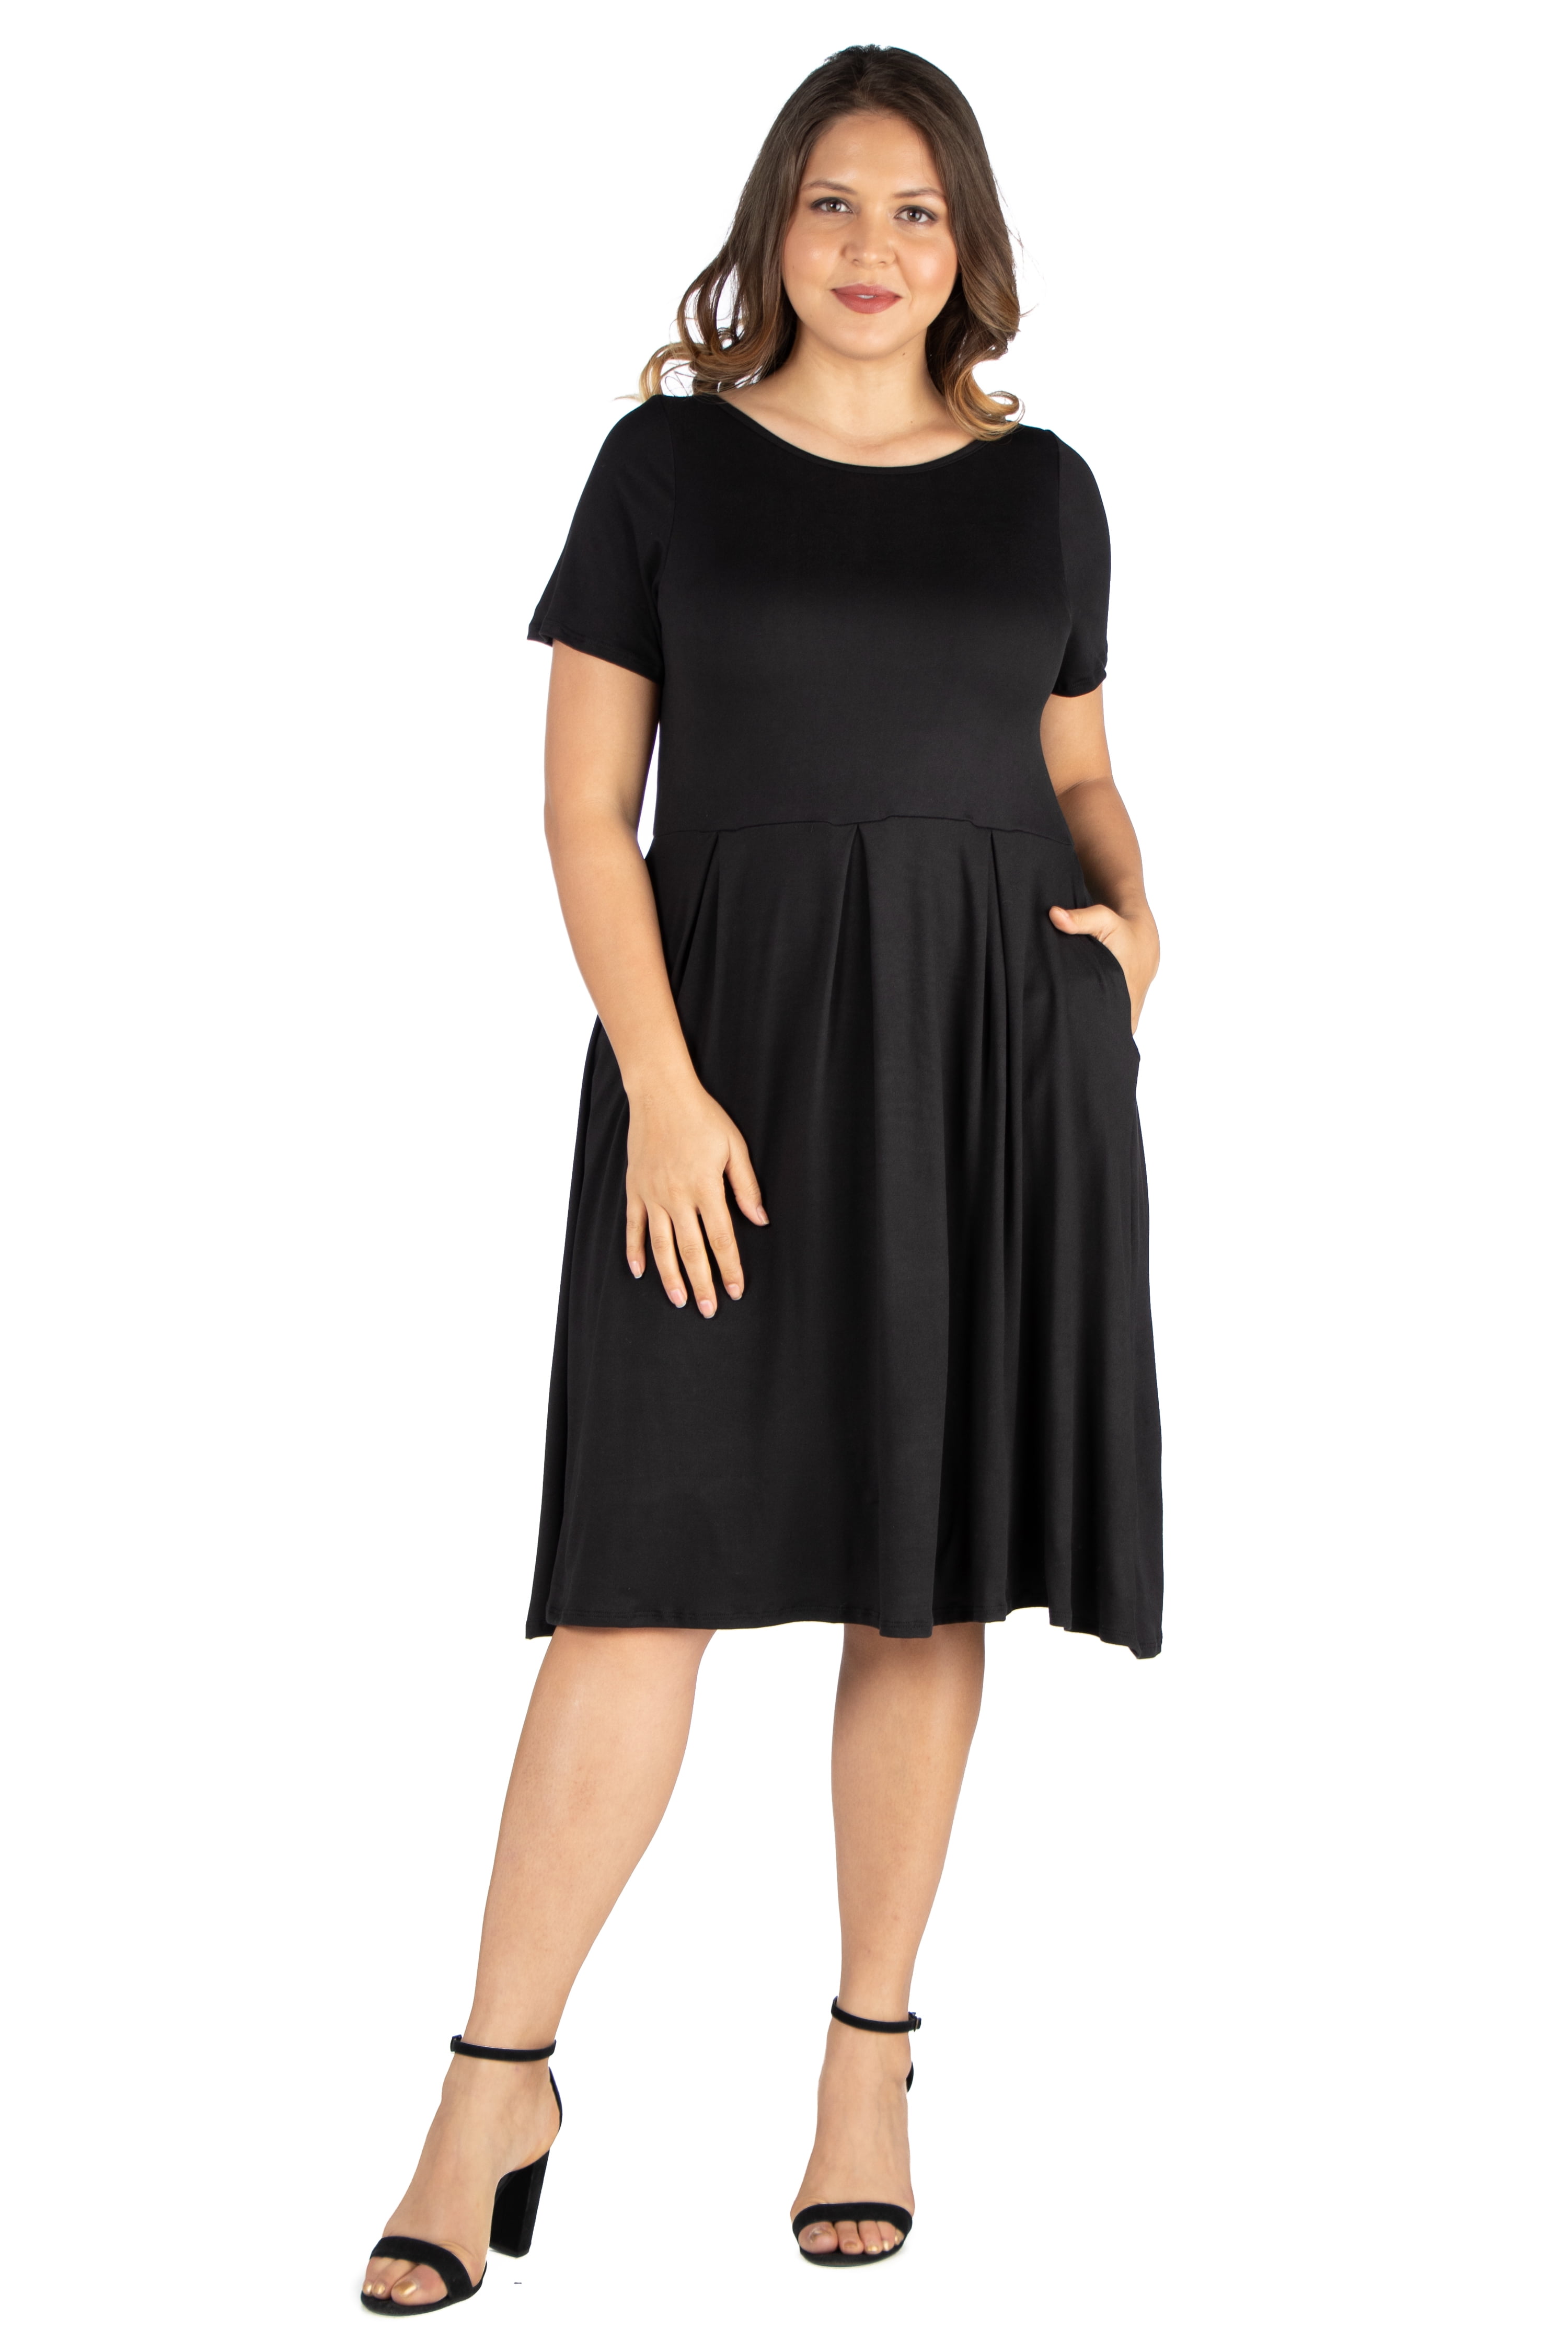 Women’s Plus Size Short Sleeve Midi Skater Dress With Pockets - Walmart.com